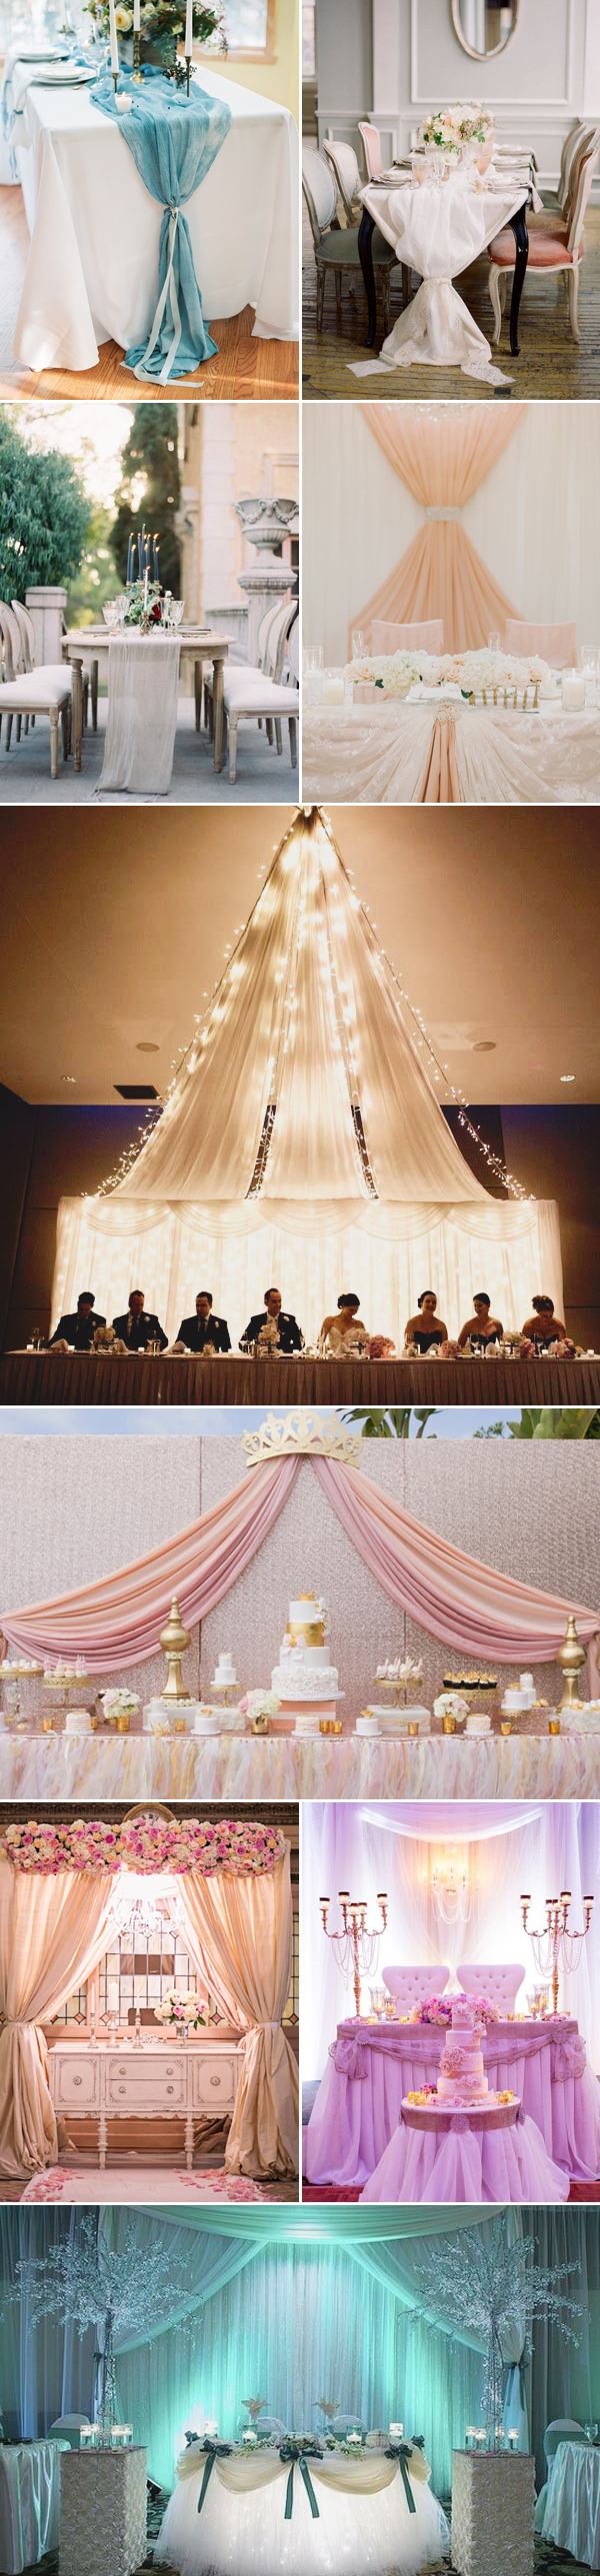 draping wedding reception table ideas